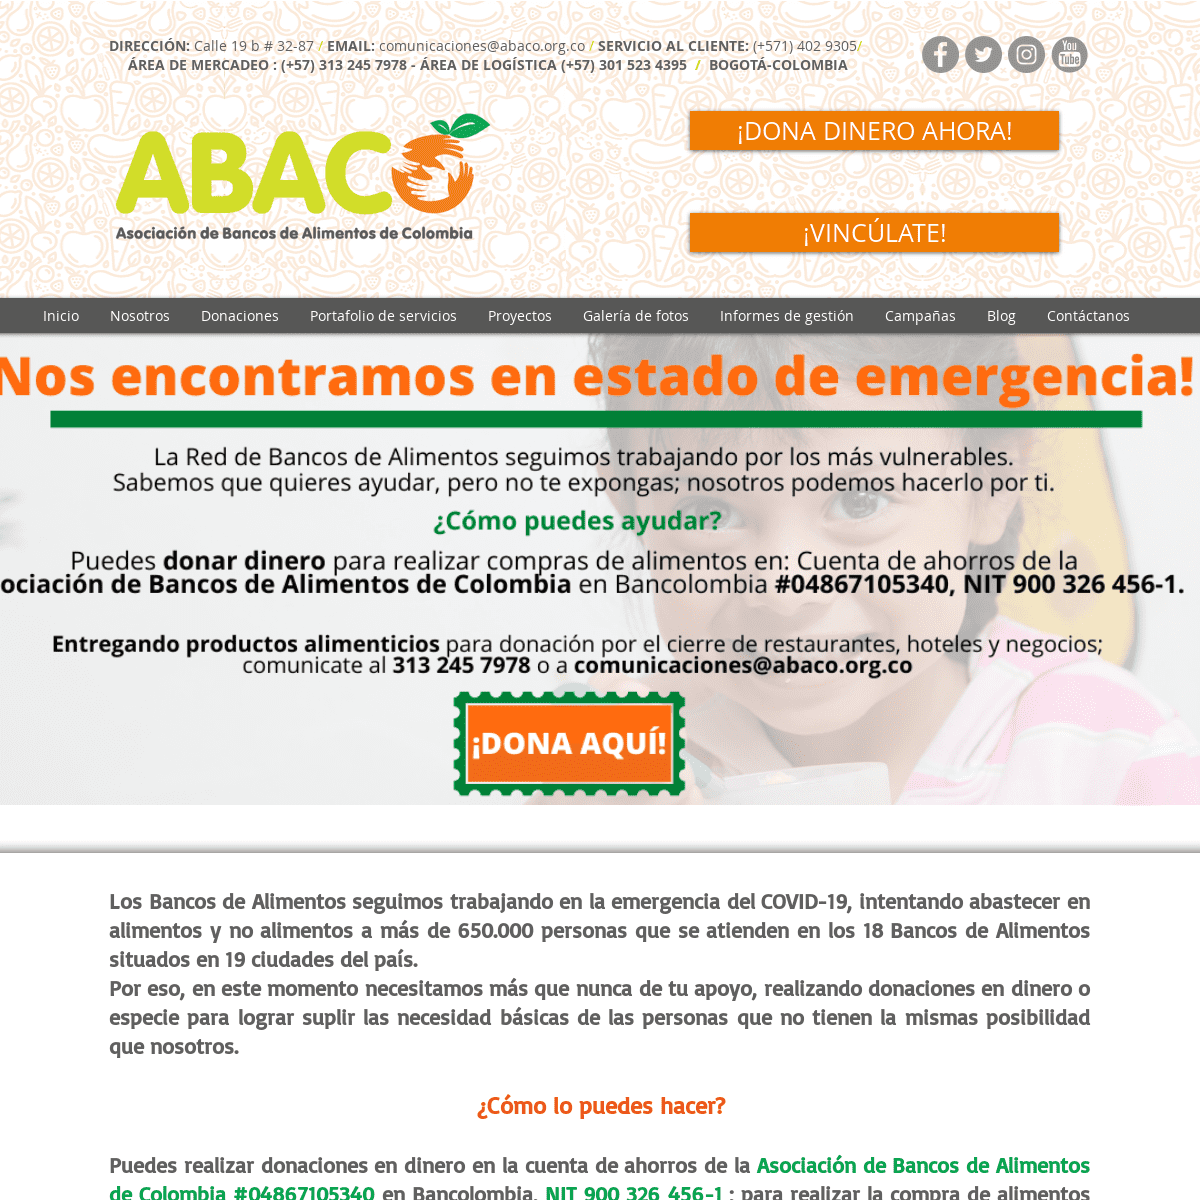 A complete backup of bancosdealimentosdecolombia.com